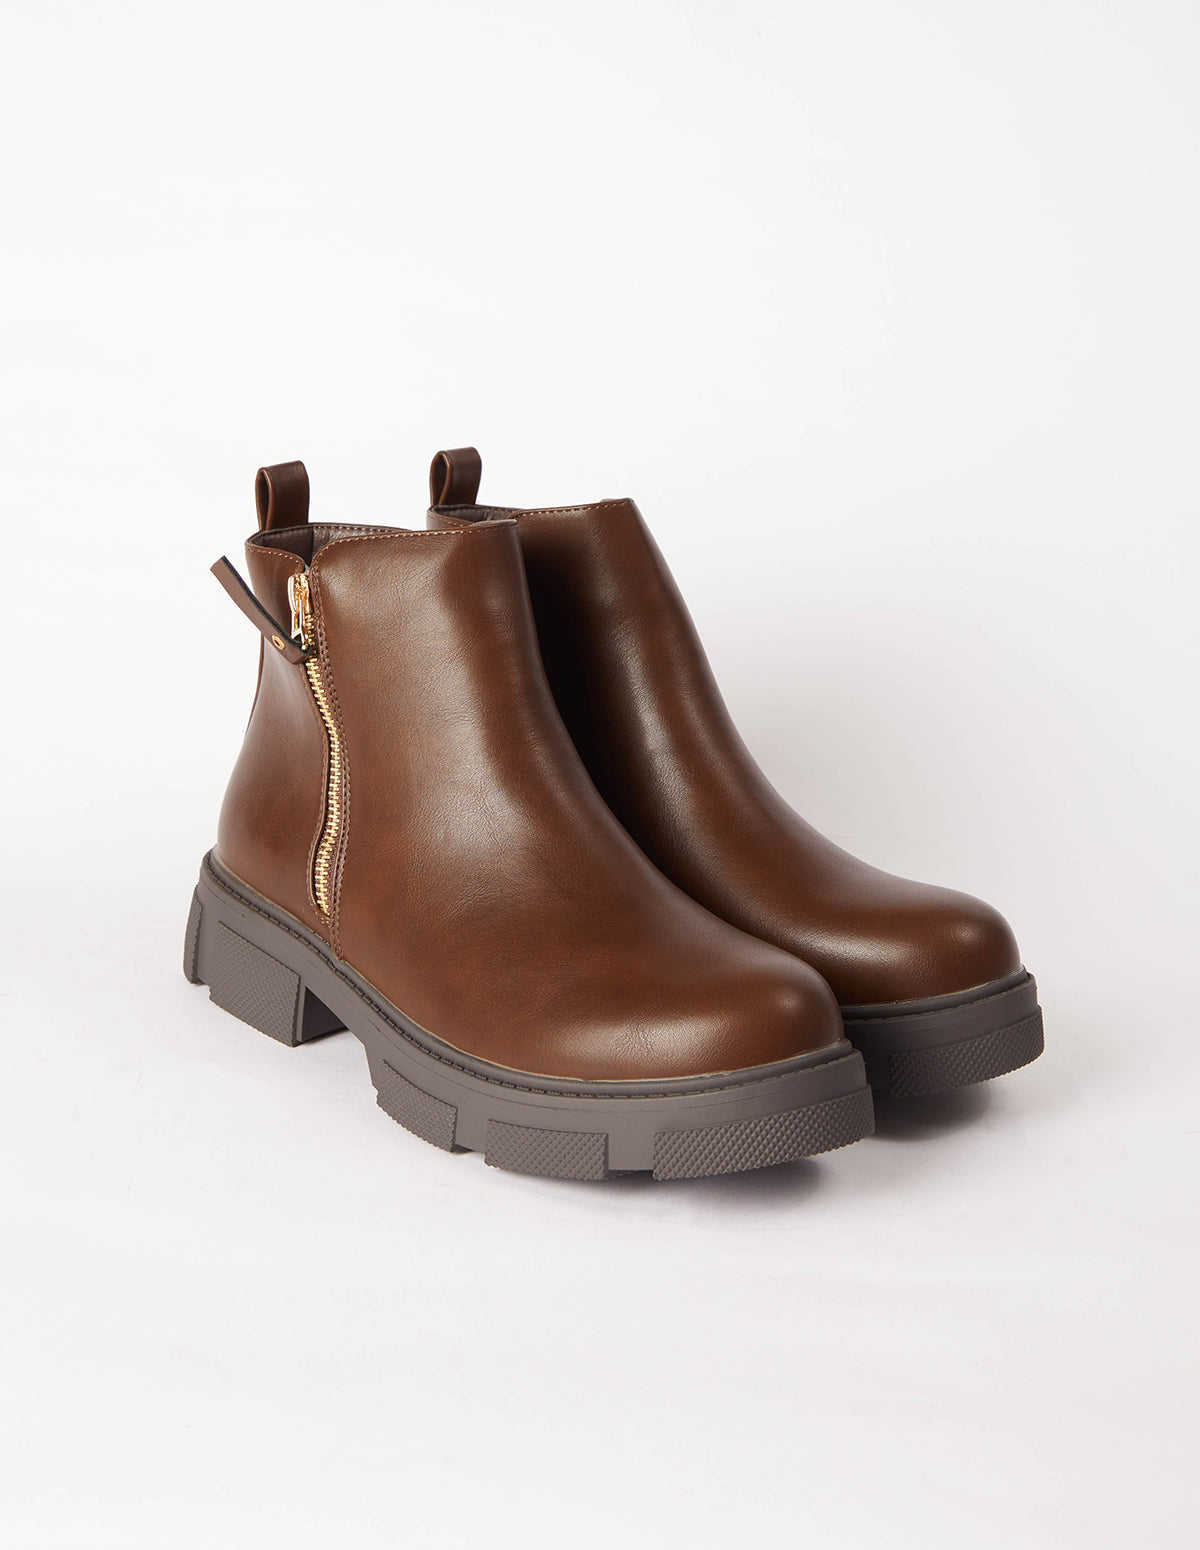 Chunky Ankle Boots - UK 3 (EU 36) / CHOCOLATE